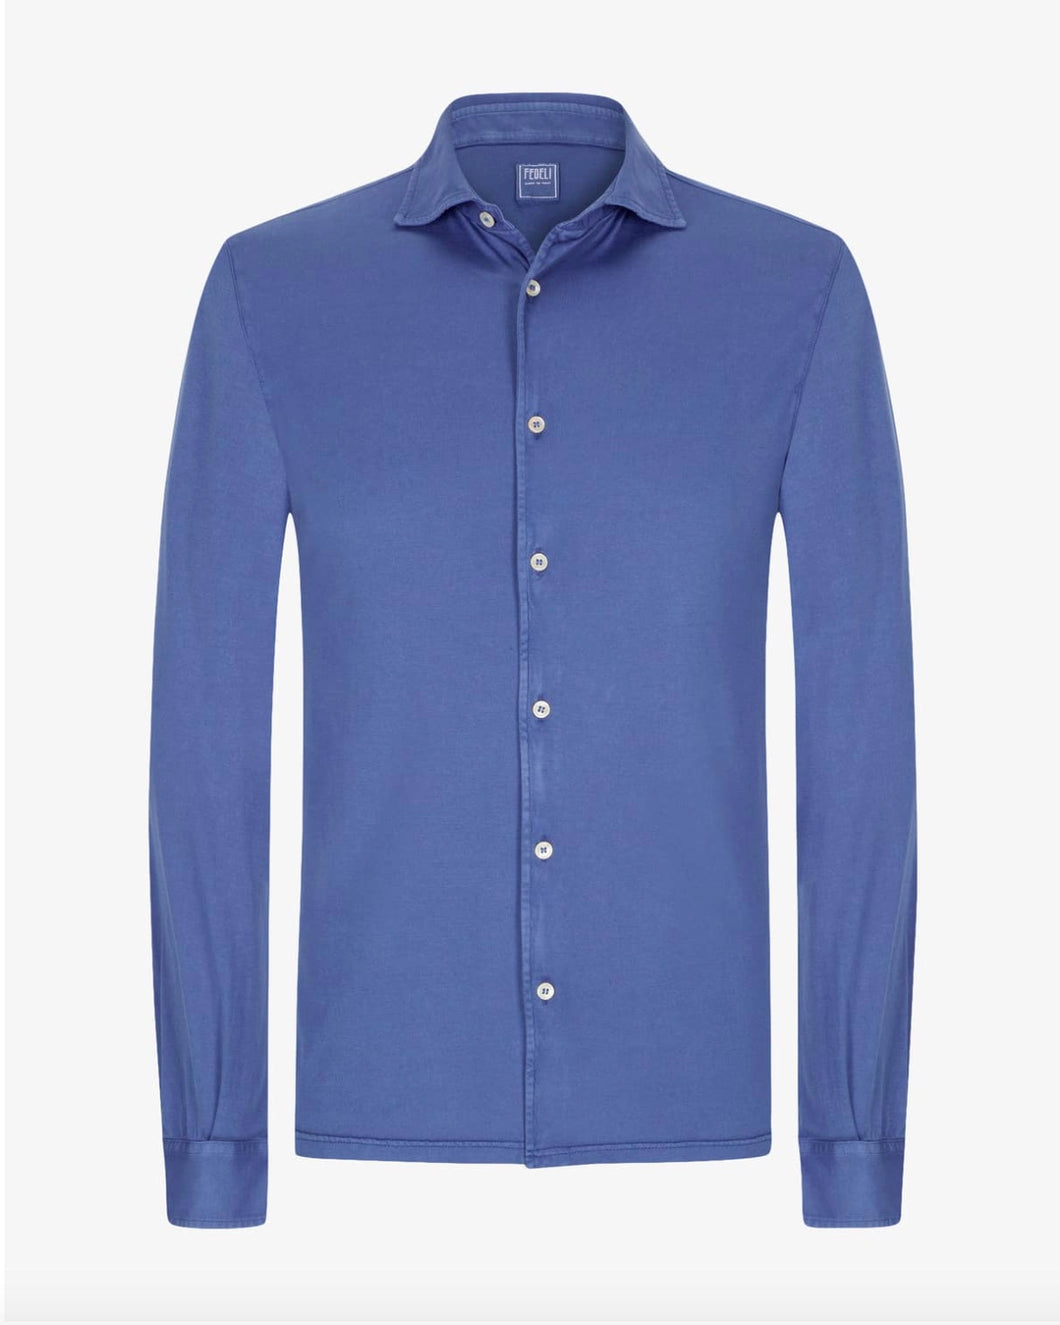 Fedeli 'Jason' Giza Cotton Jersey Shirt, Cobalt Blue